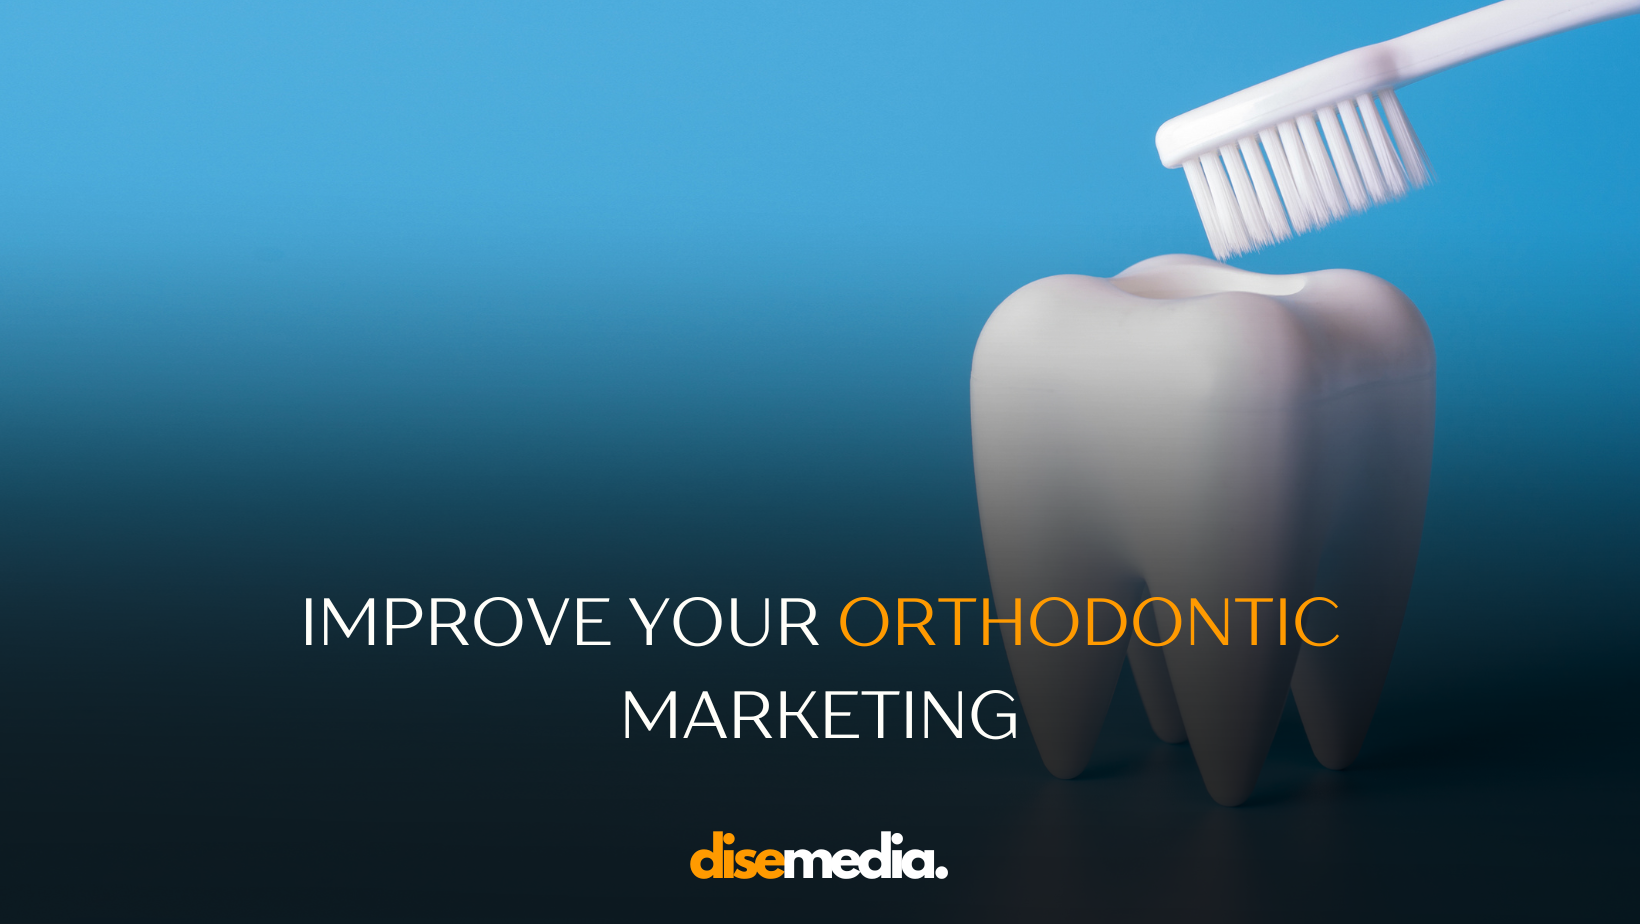 11 Ways to Improve Your Orthodontic Marketing